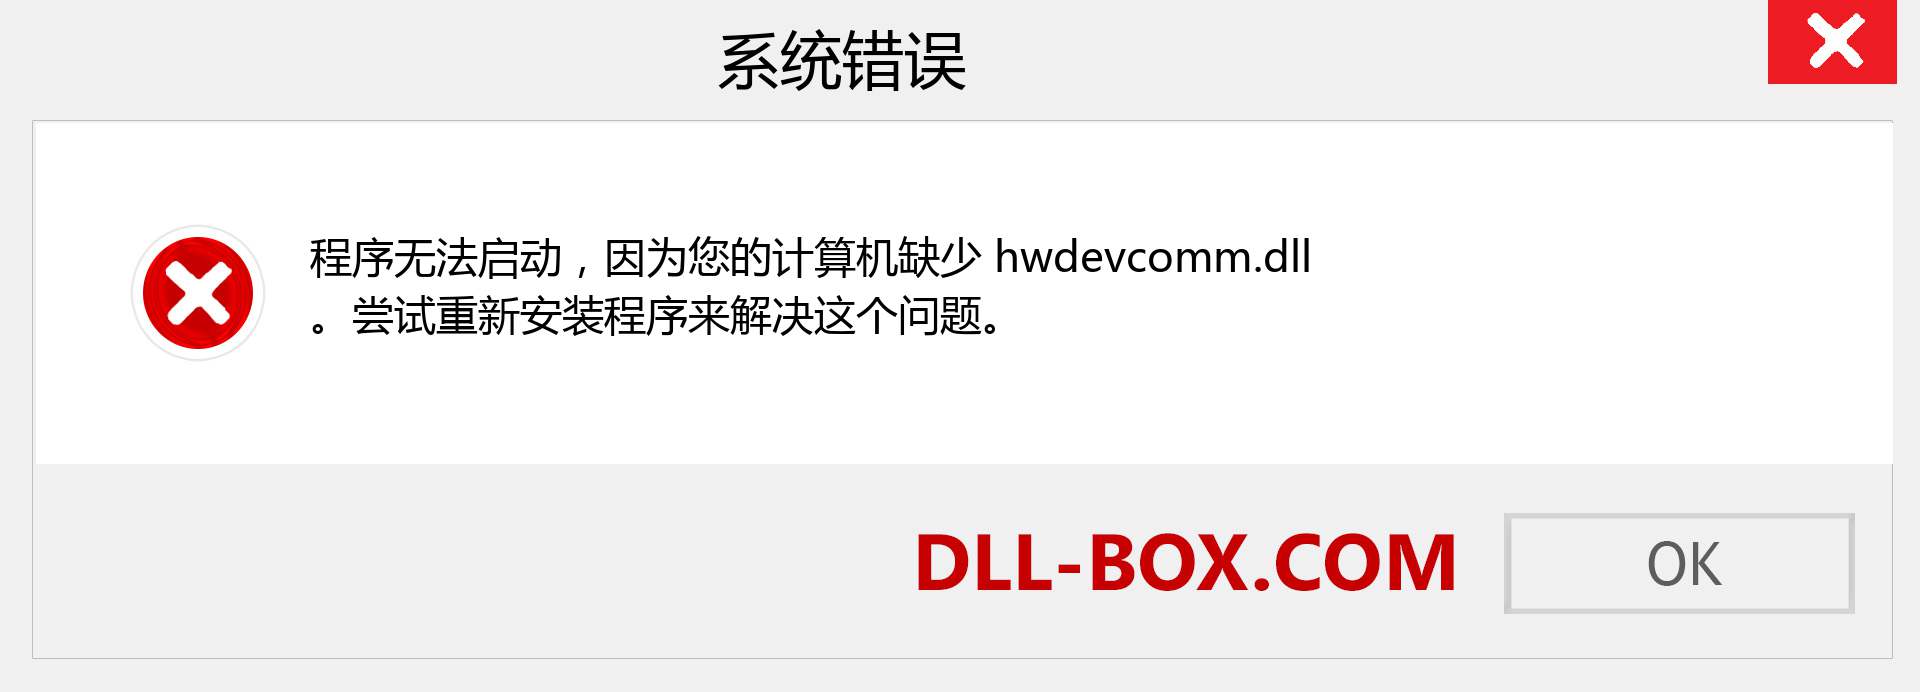 hwdevcomm.dll 文件丢失？。 适用于 Windows 7、8、10 的下载 - 修复 Windows、照片、图像上的 hwdevcomm dll 丢失错误